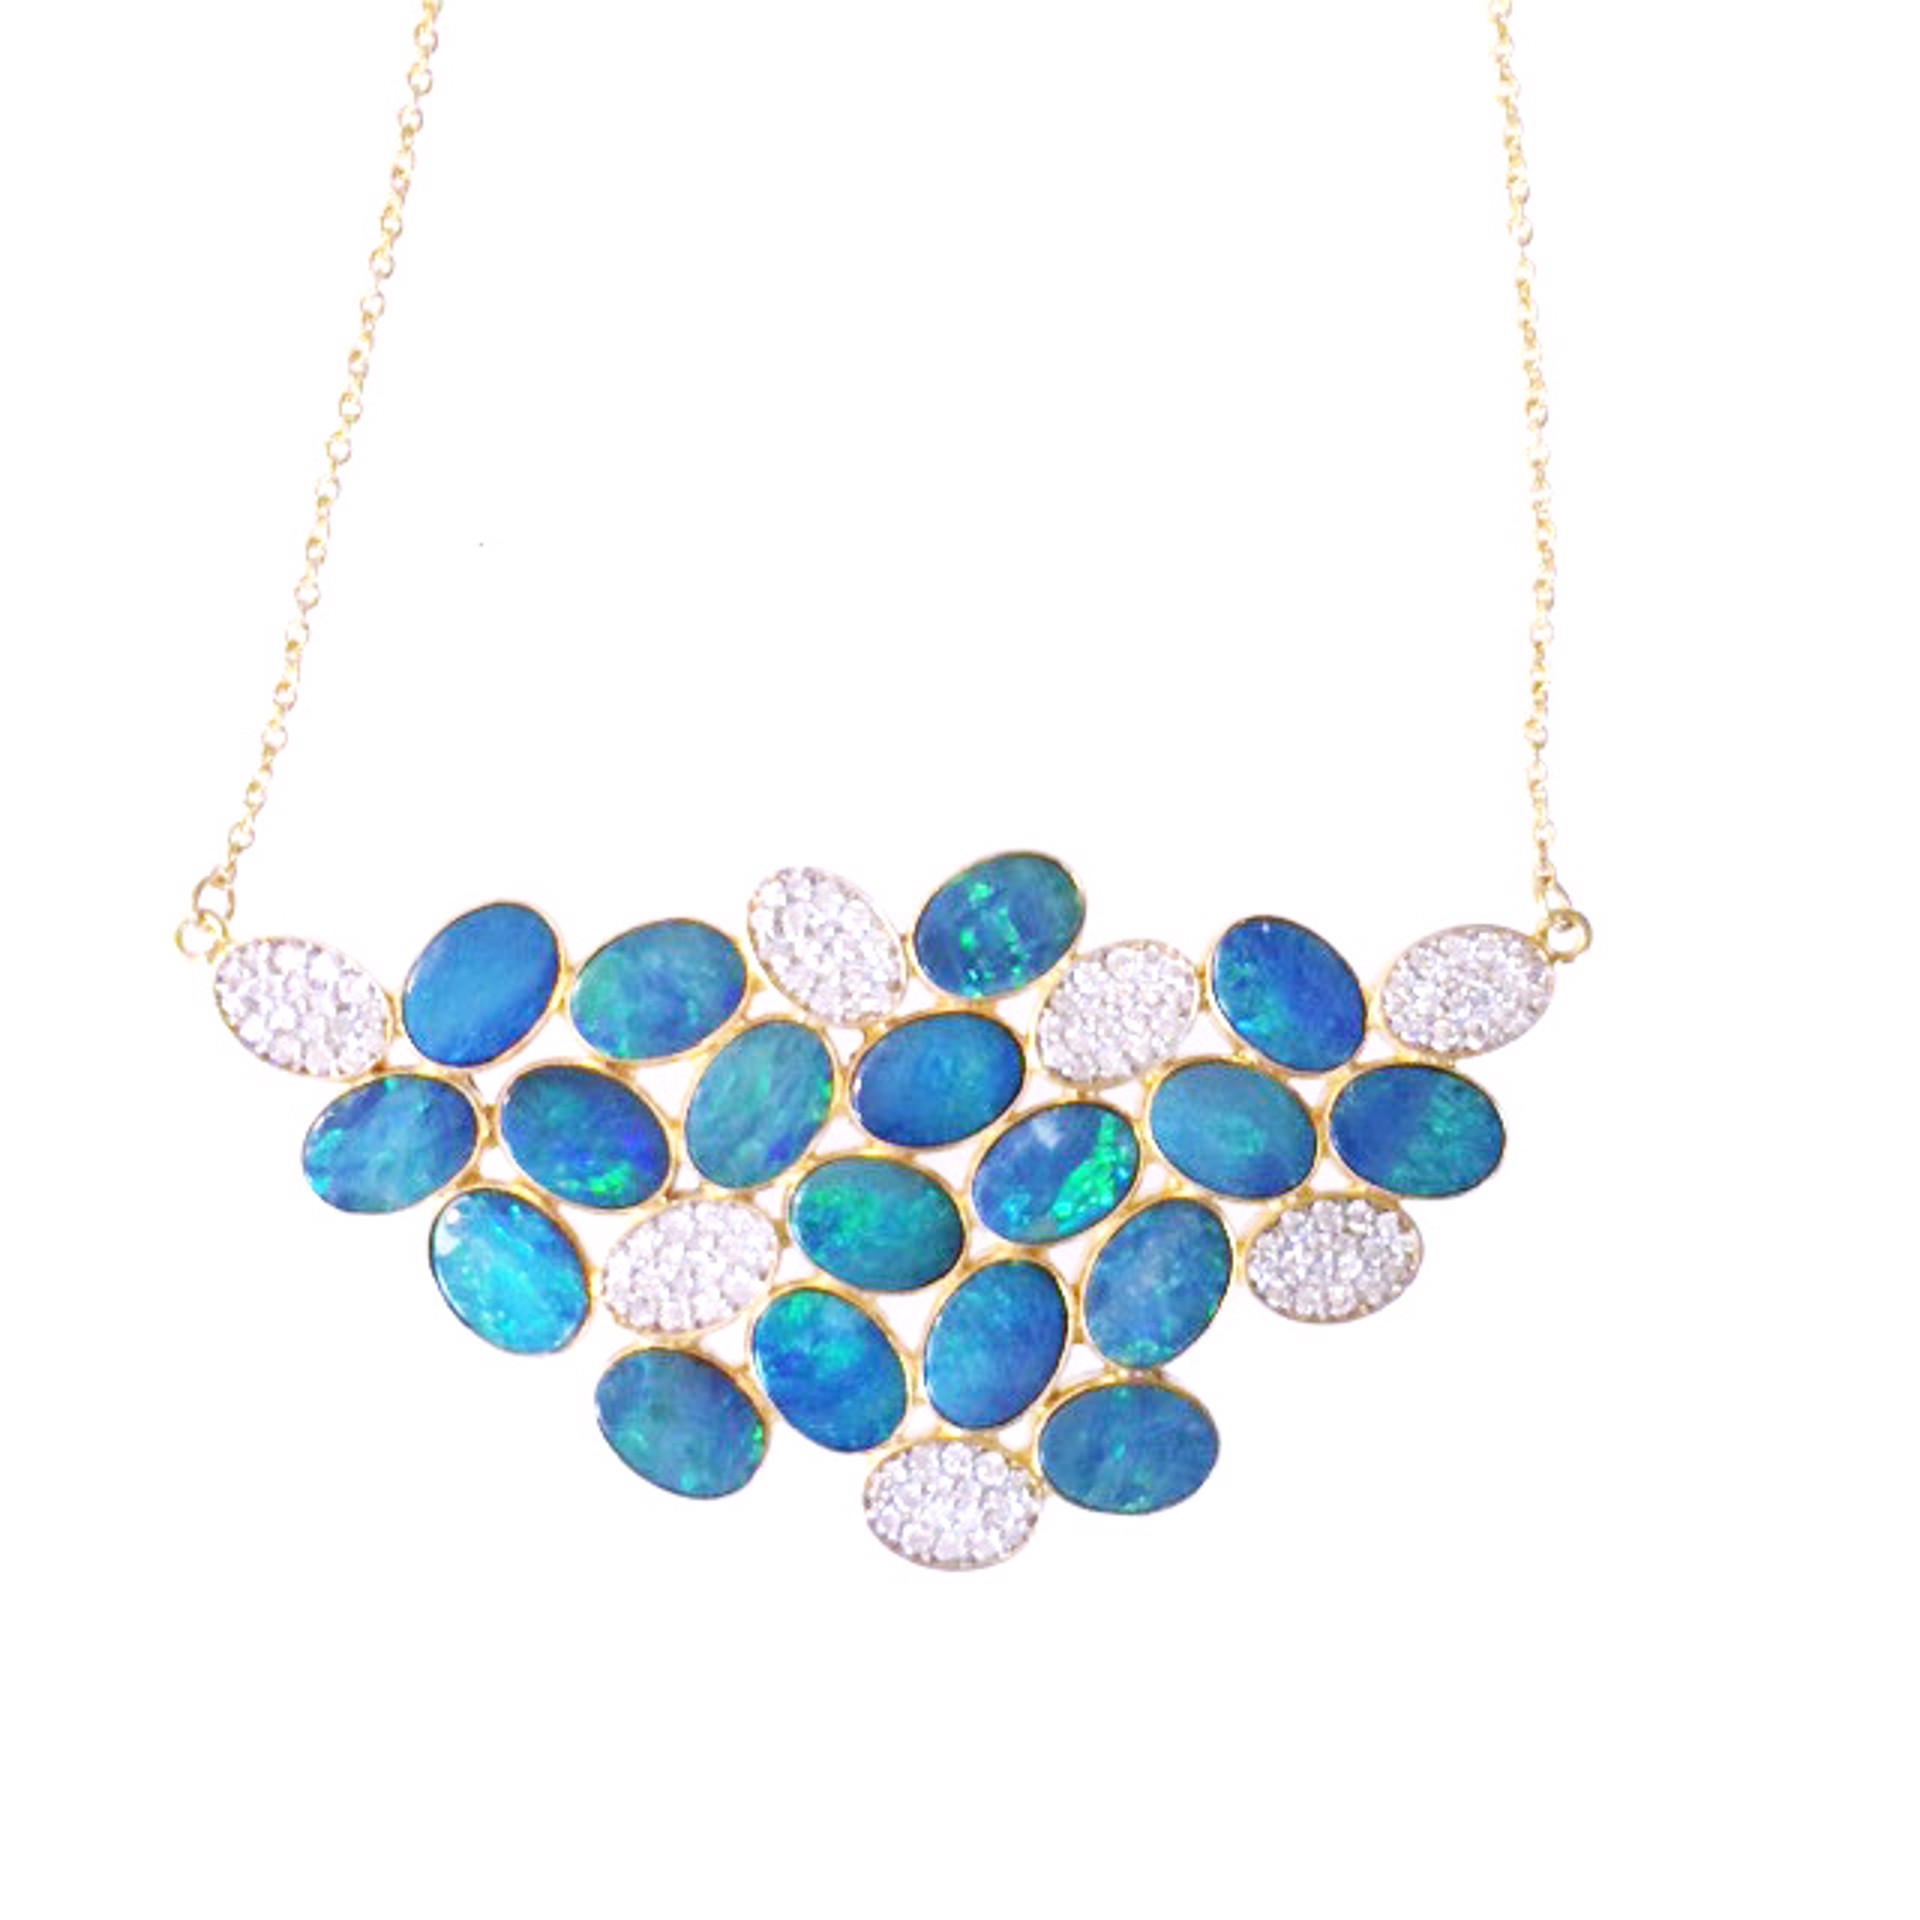 Boulder Opal and Diamond Necklace by Lauren Harper